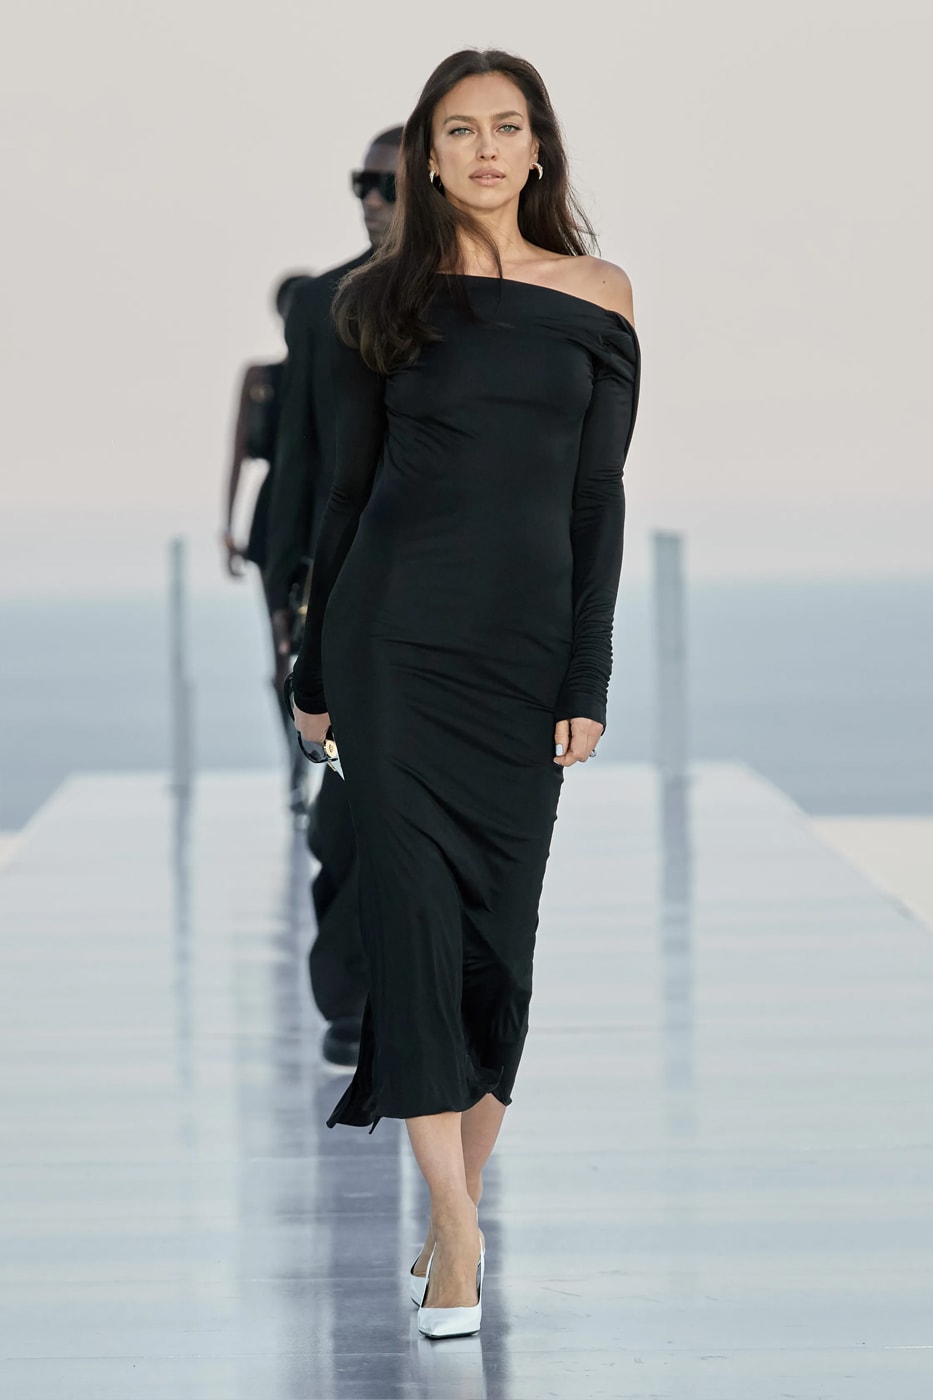 Dua Lipa Collaborates With Donatella Versace to Design New Collection